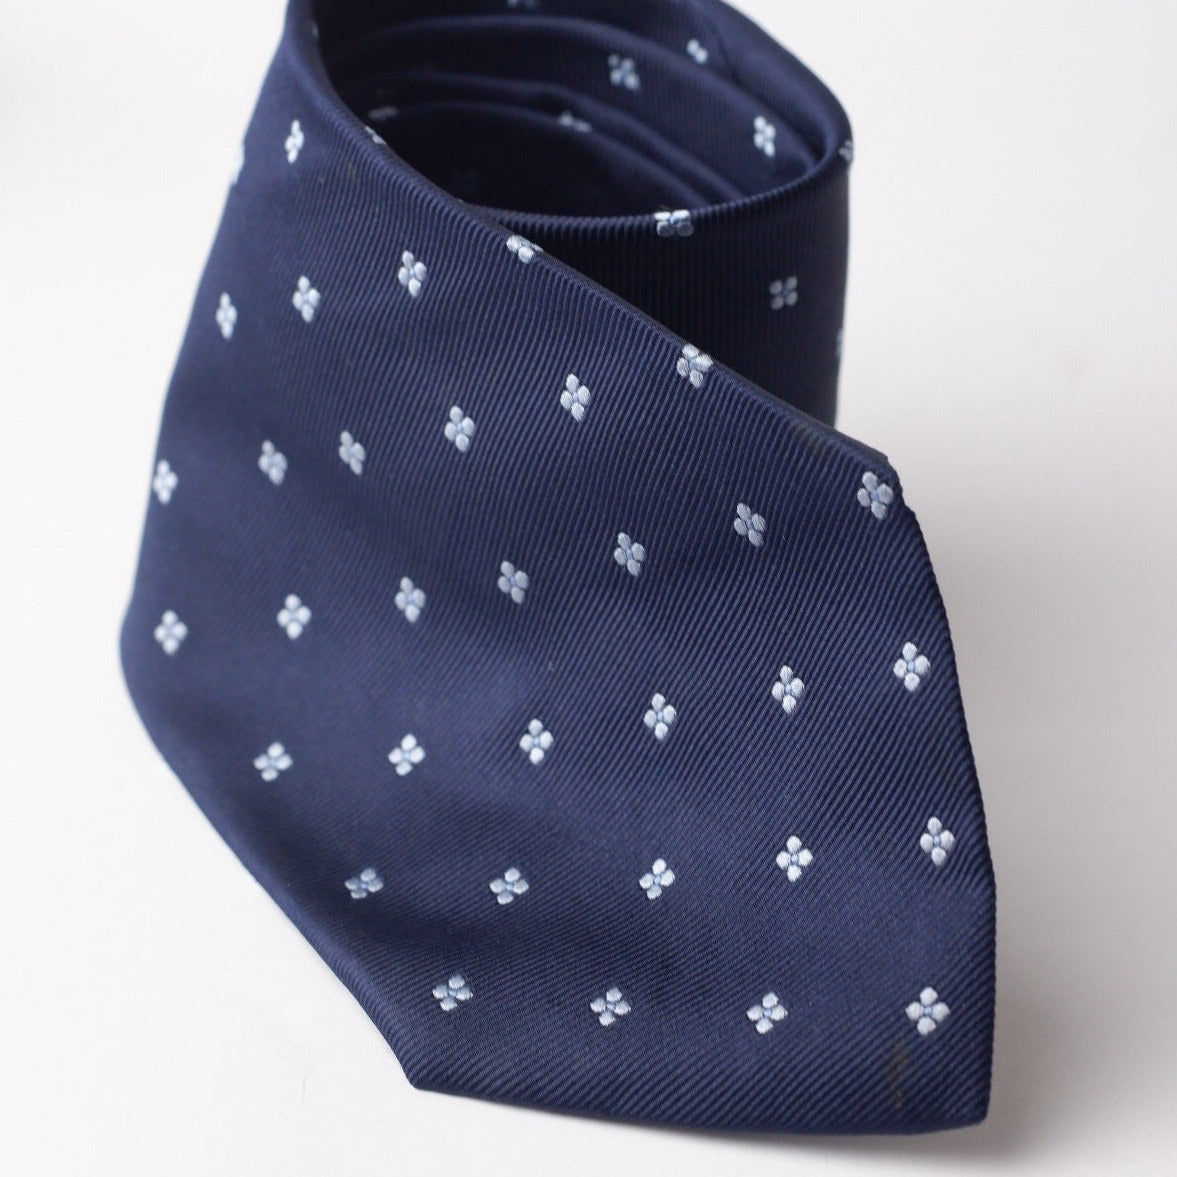 Andrew's Ties Navy with Light Blue Clover Pattern Necktie